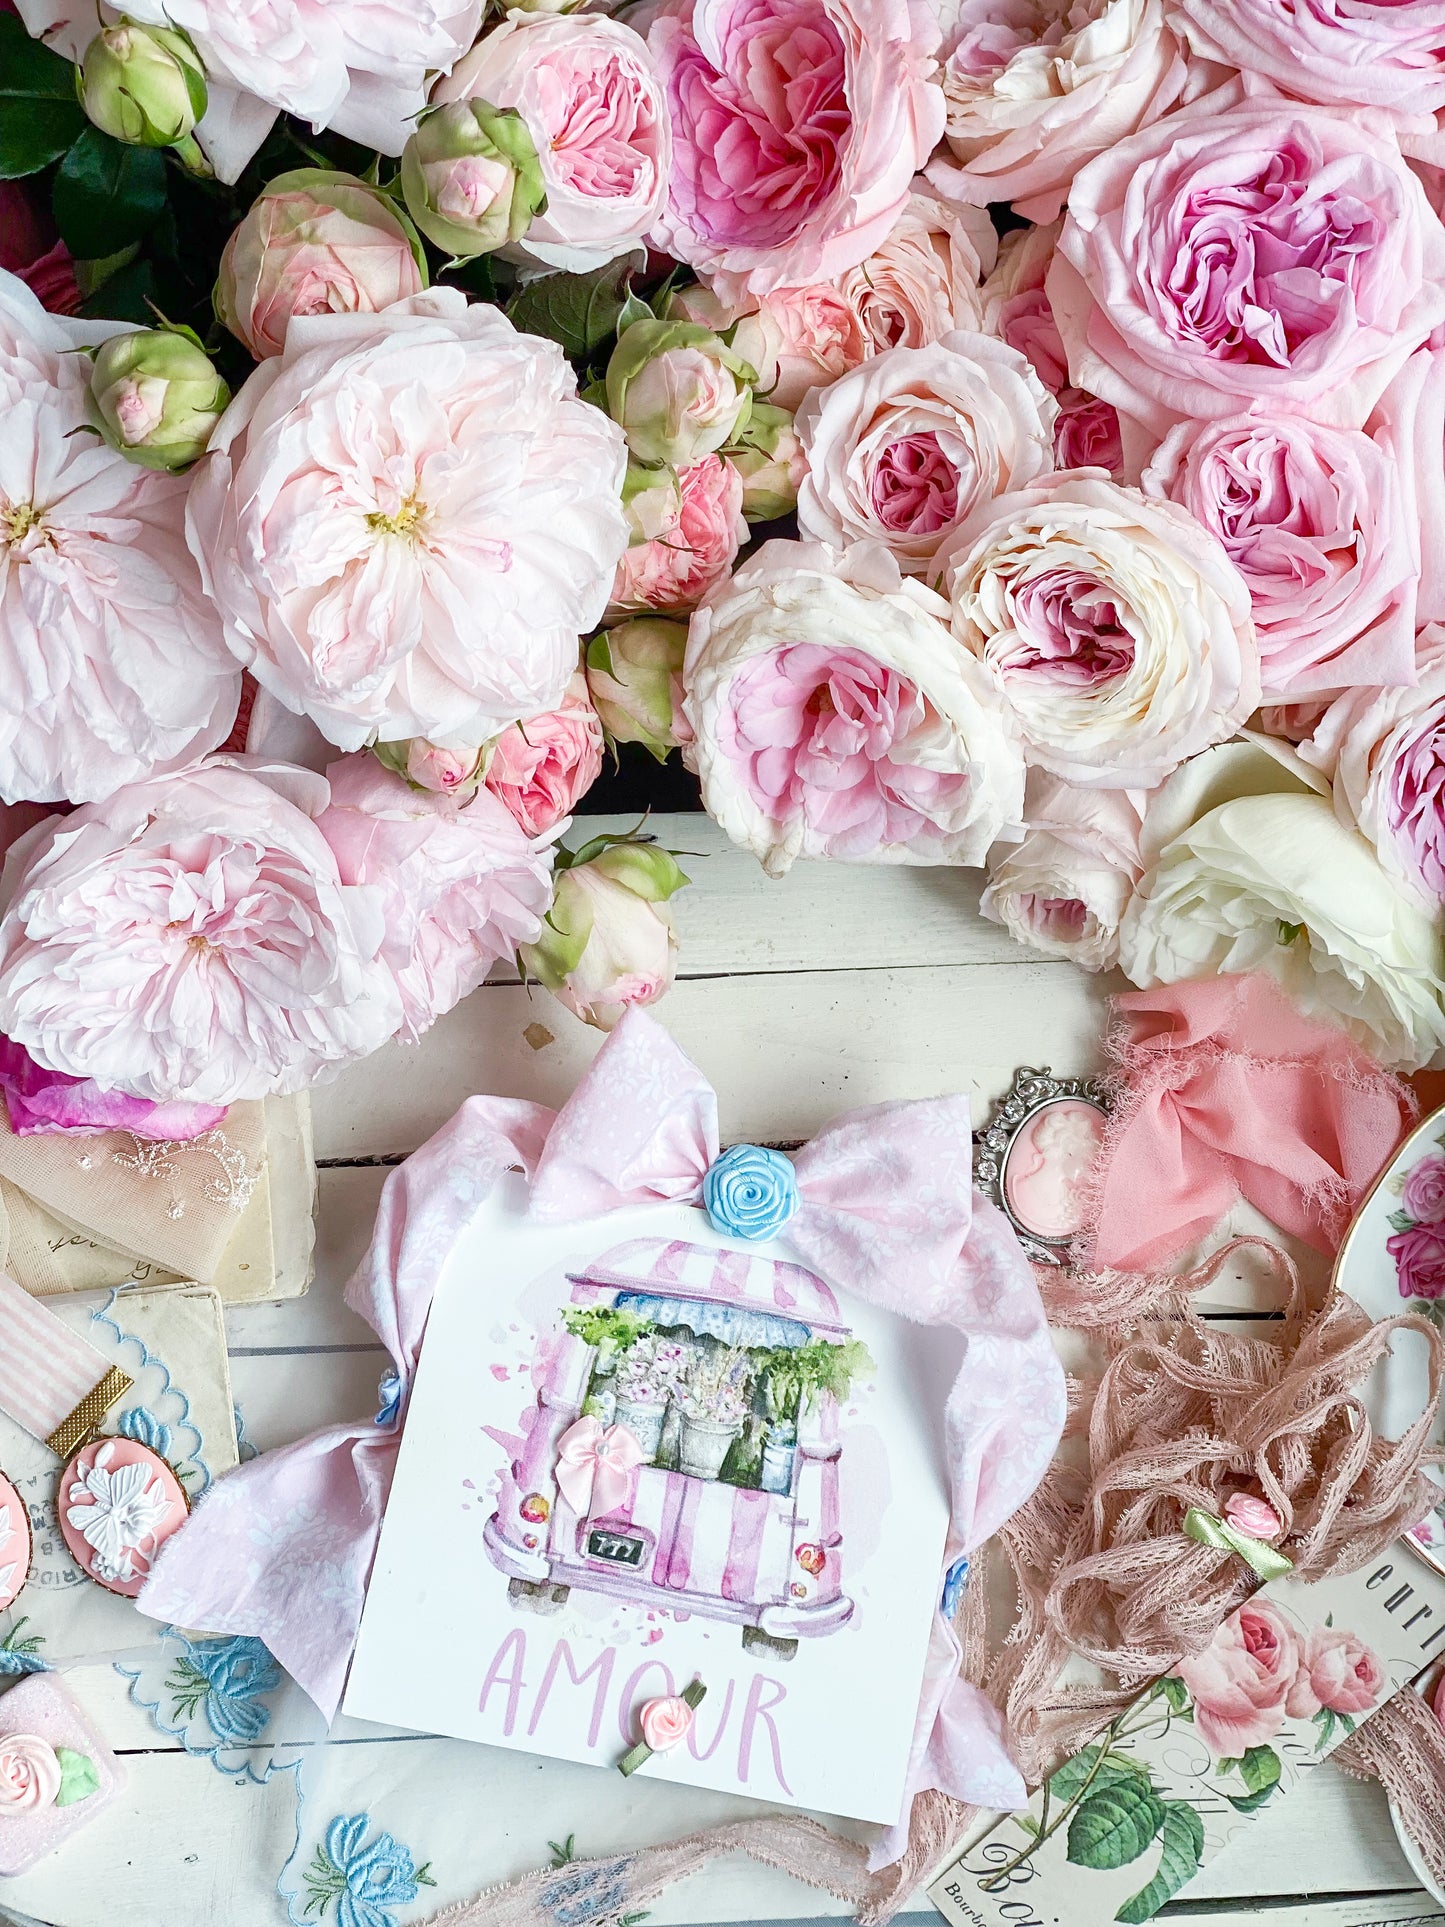 Bespoke Pastel Pink Flower Shop Amour Mini Sign